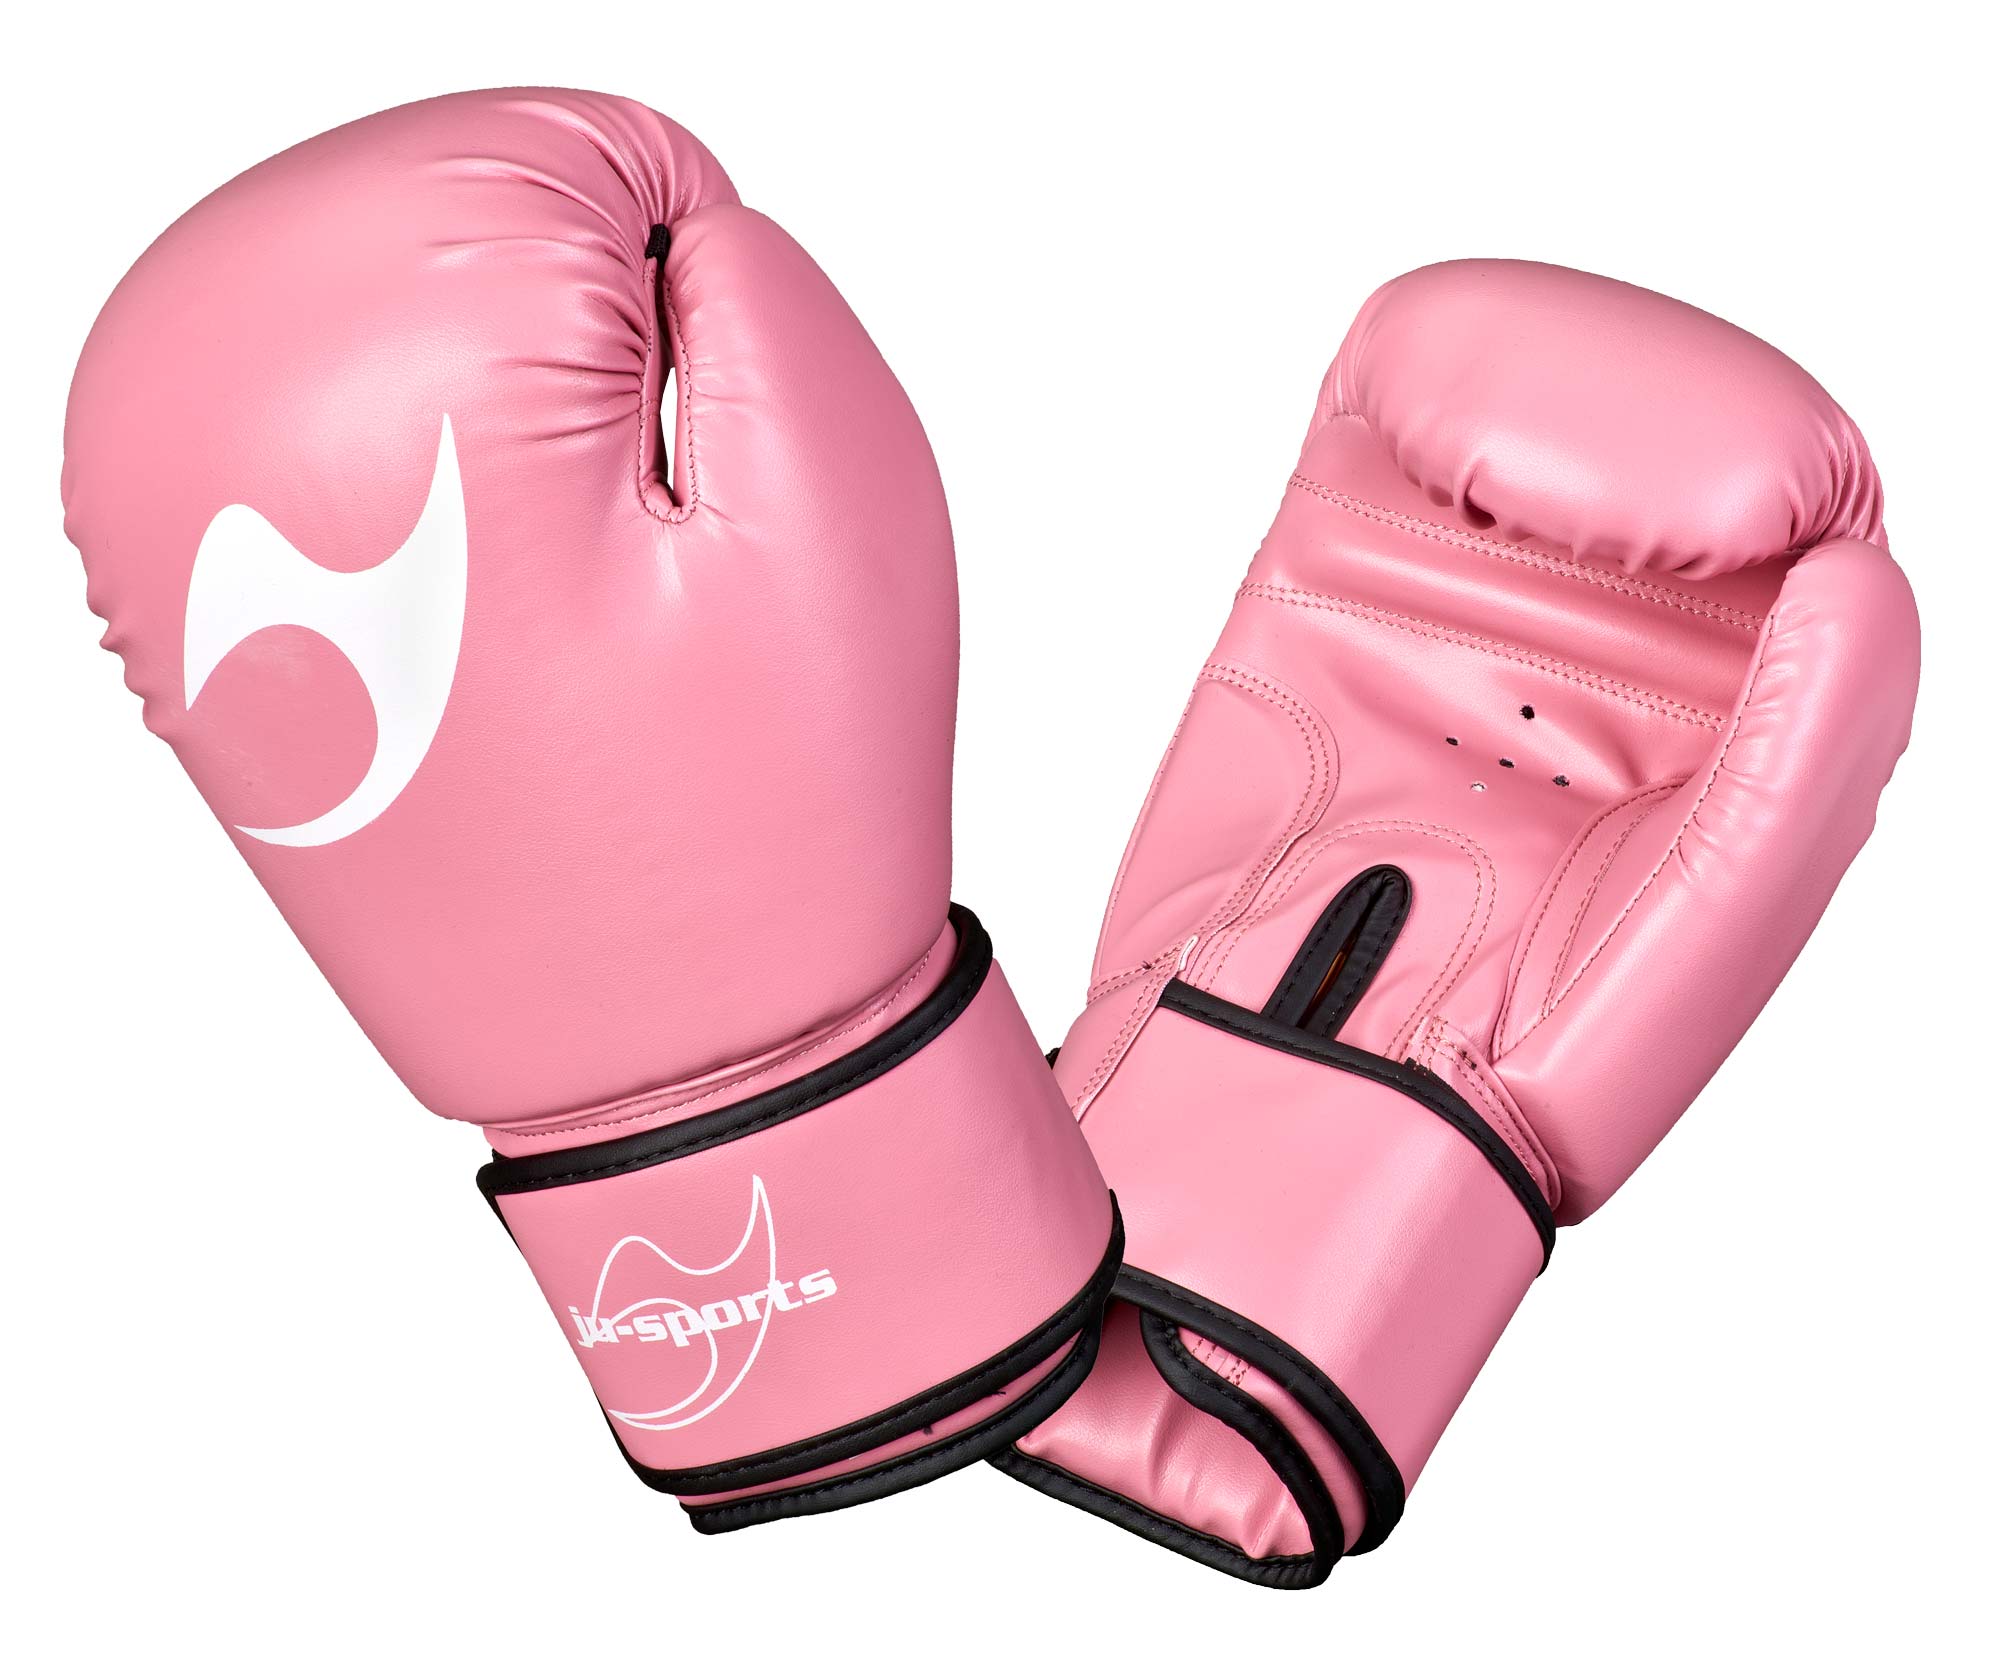 Ju-Sports Boxing Gloves Lady pink, 10 oz.